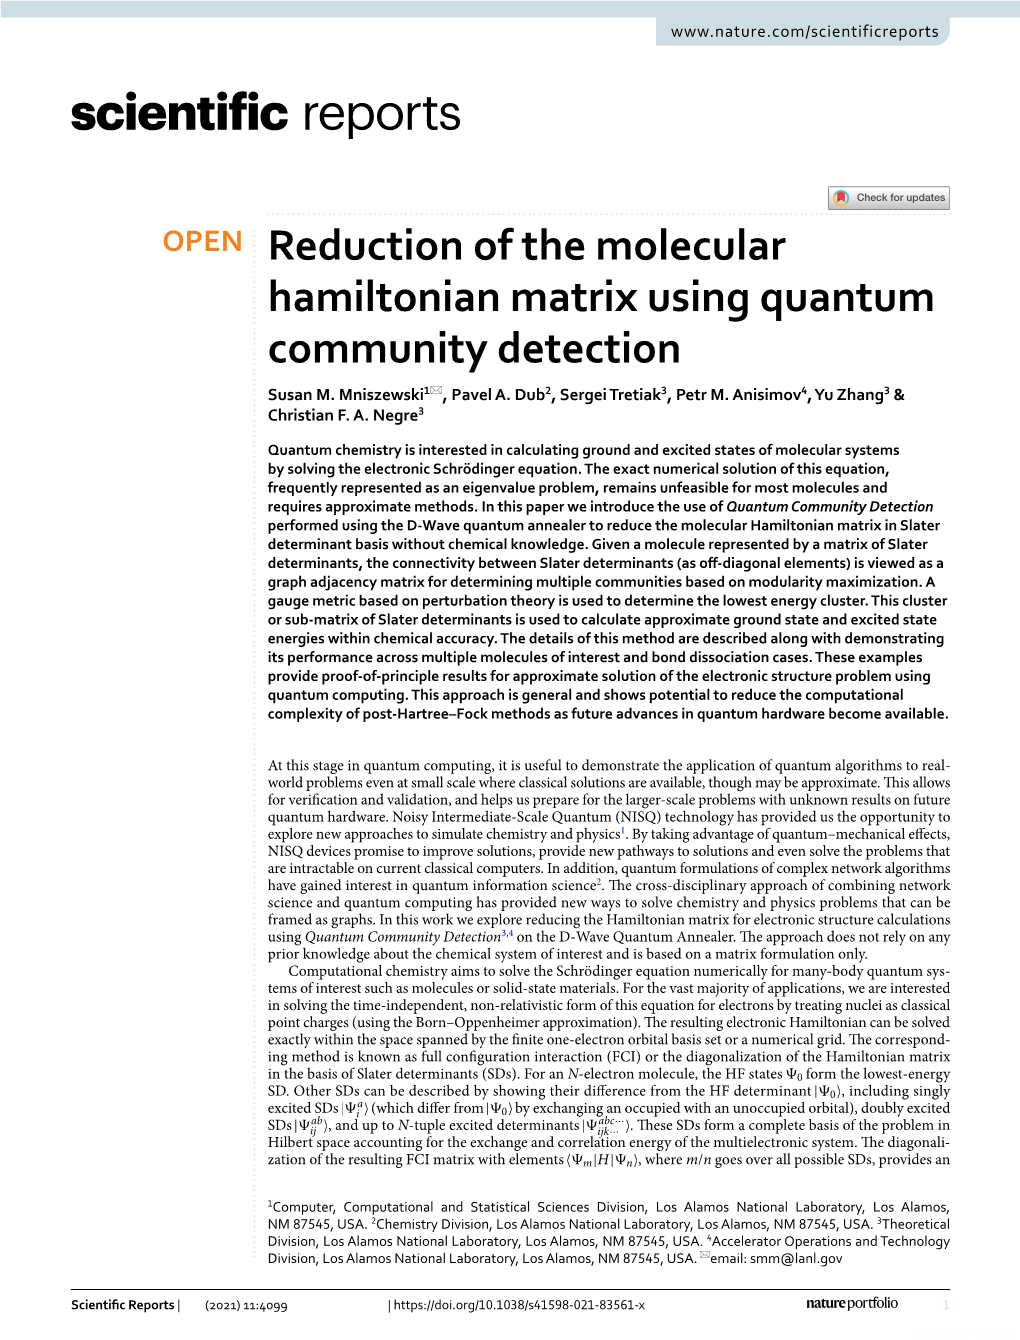 Reduction of the Molecular Hamiltonian Matrix Using Quantum Community Detection Susan M